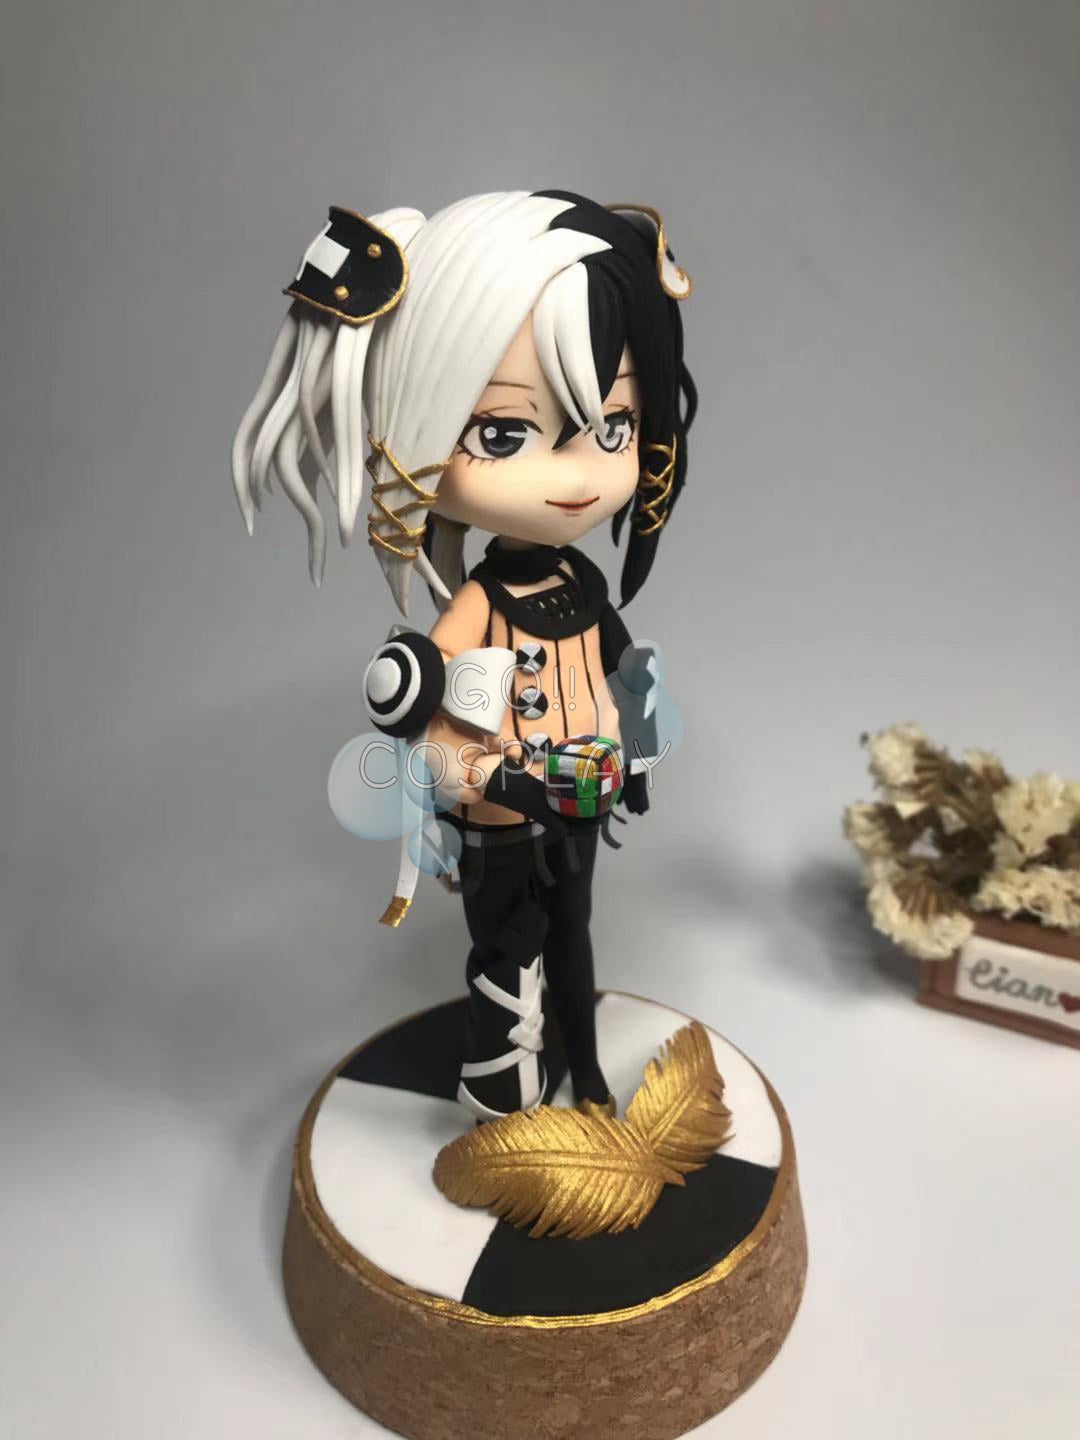 Zesshi Zetsumei Chibi Figurine Buy